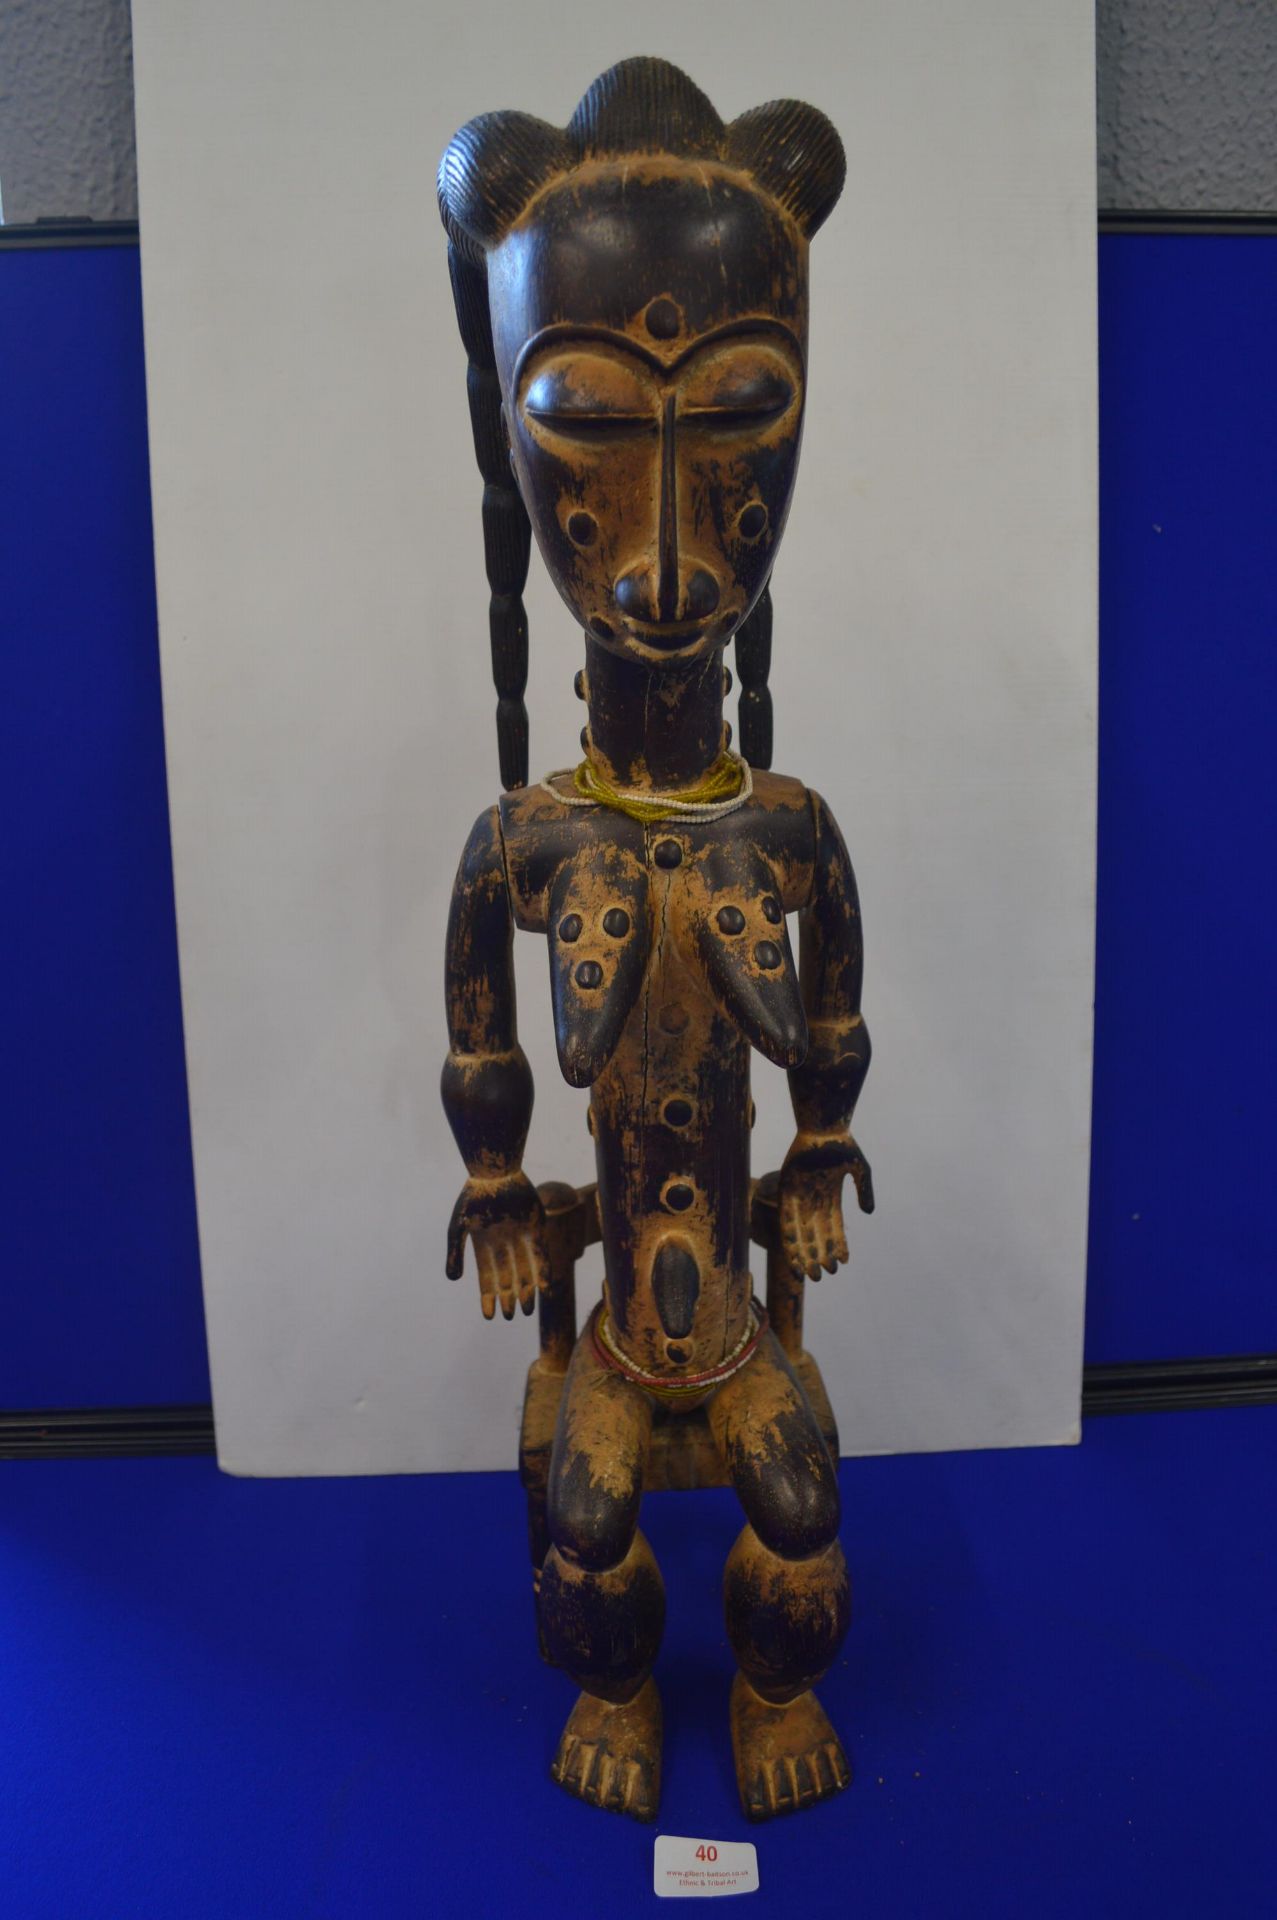 Yoruba Seated Female Fertility Figure with Mechanical Arms